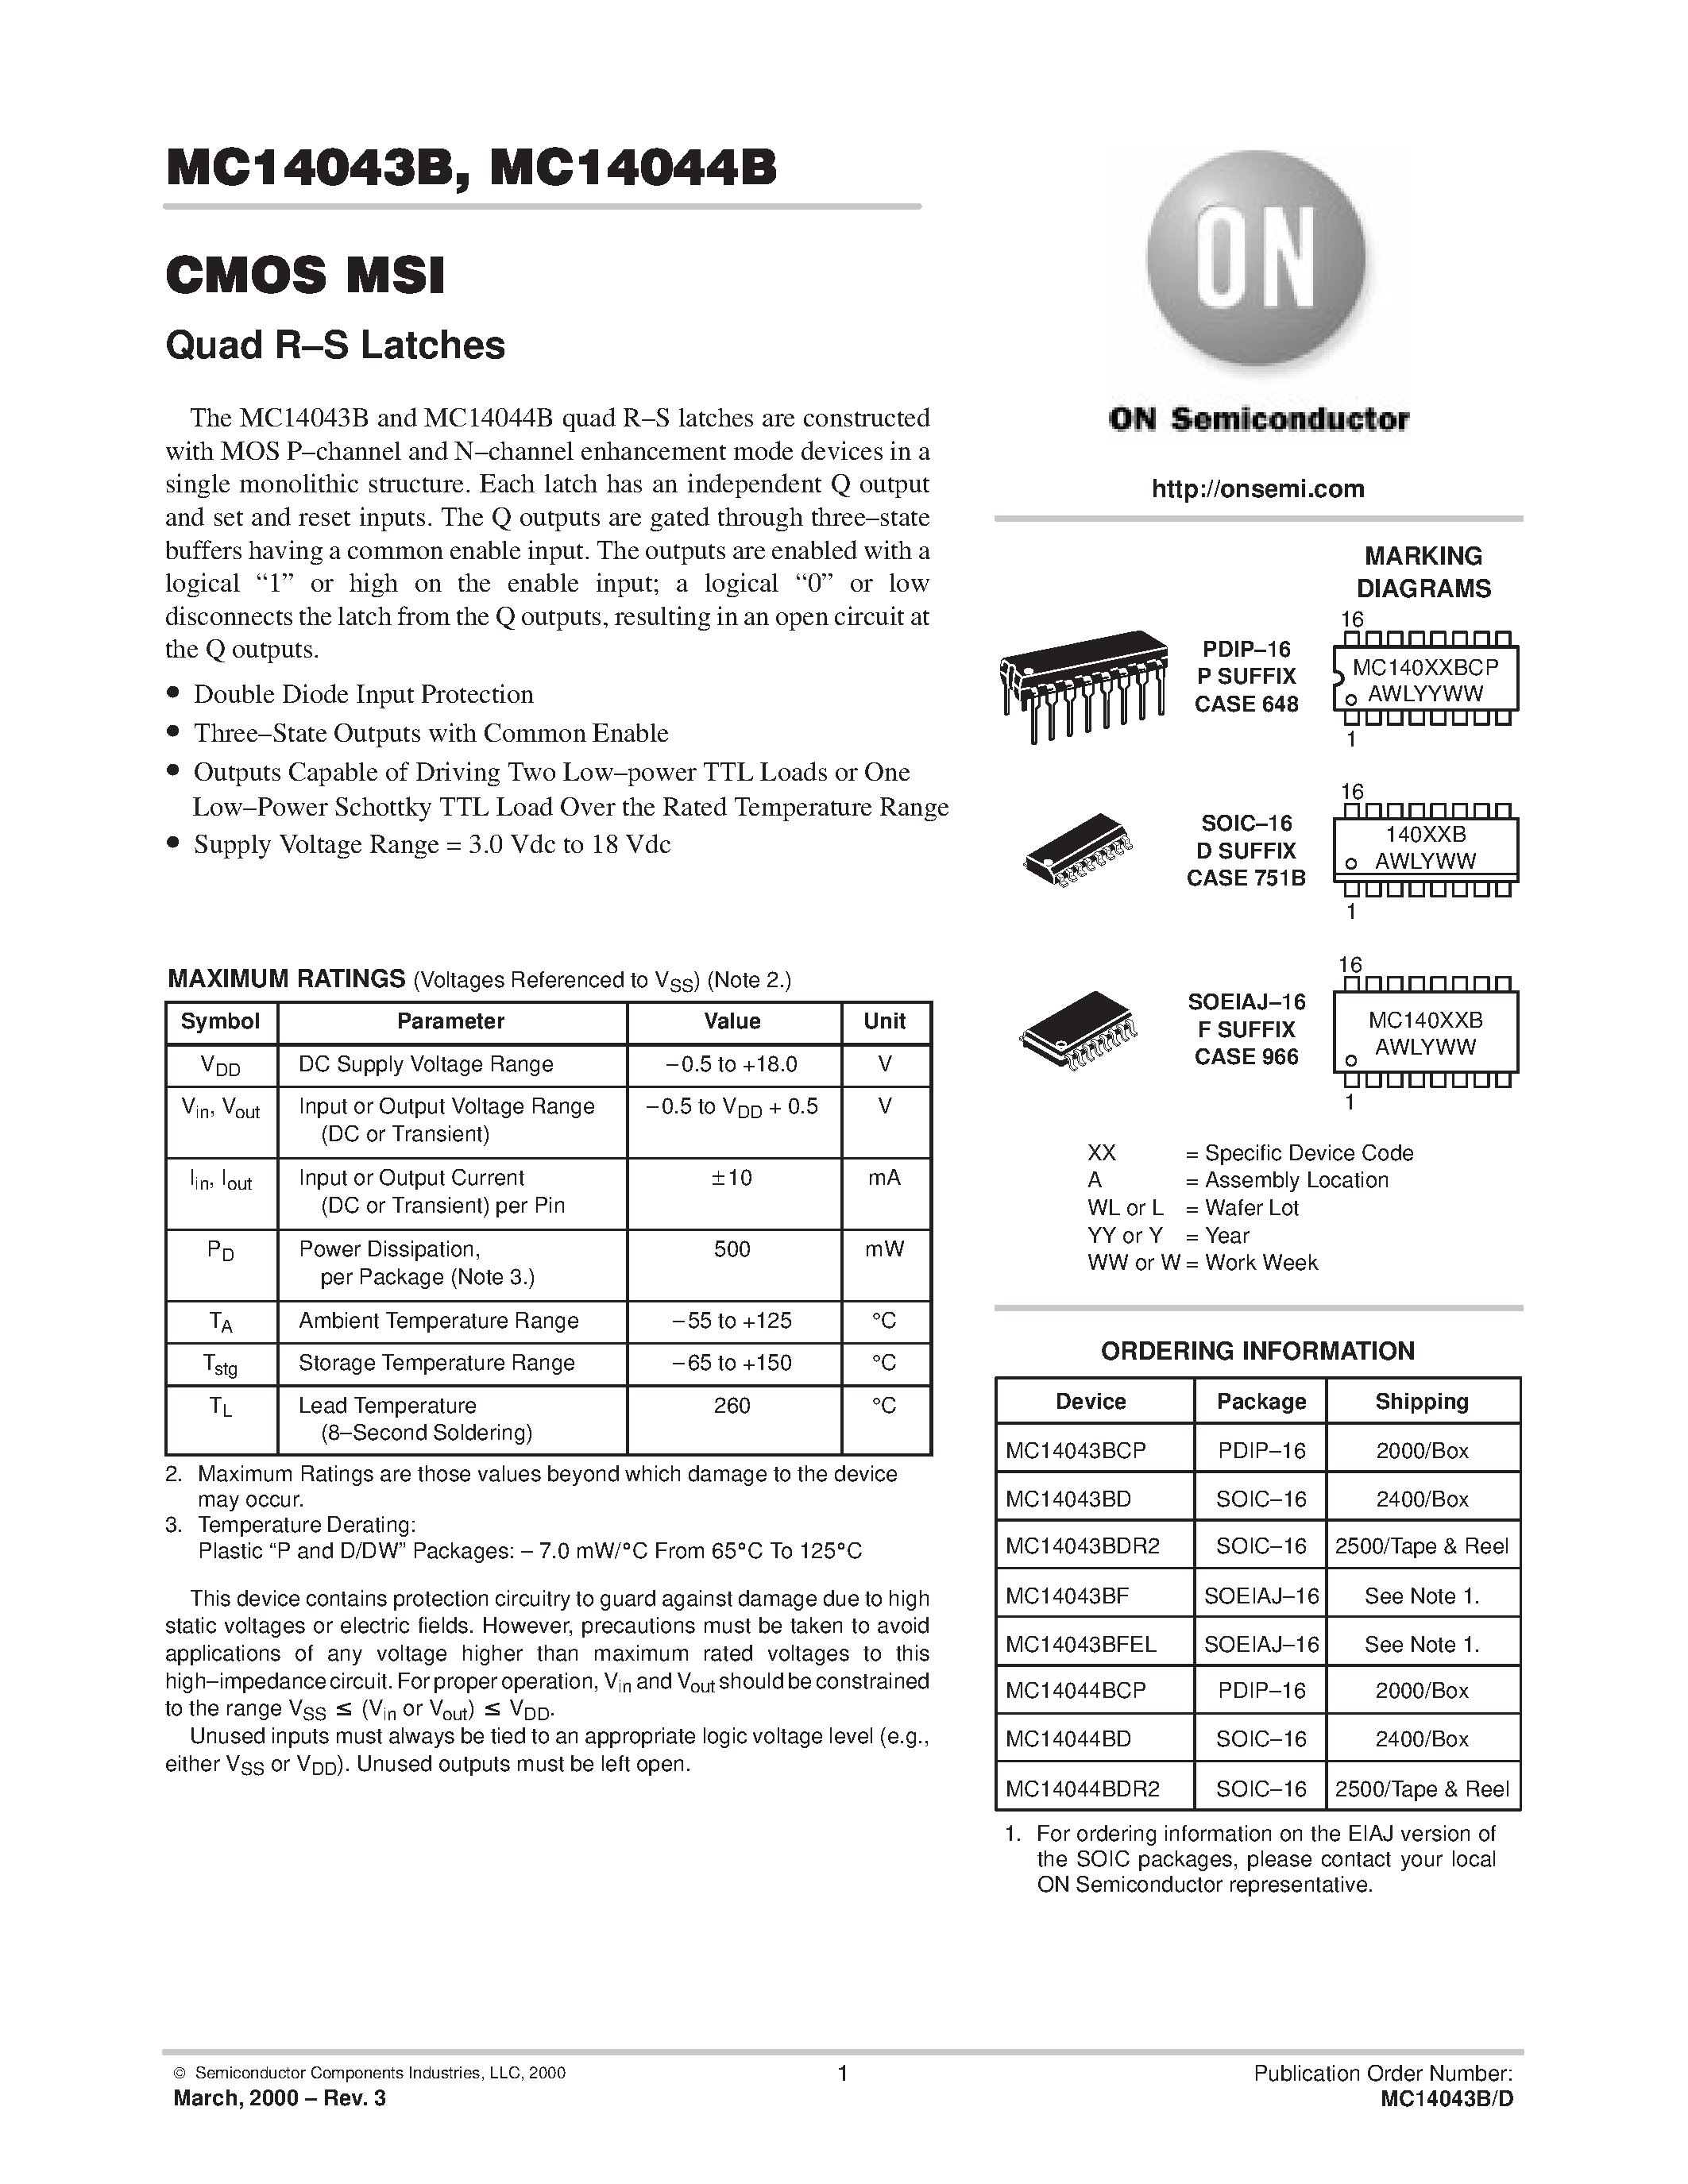 Даташит MC14044BDR2 - CMOS MSI(Quad R-S Latches) страница 1